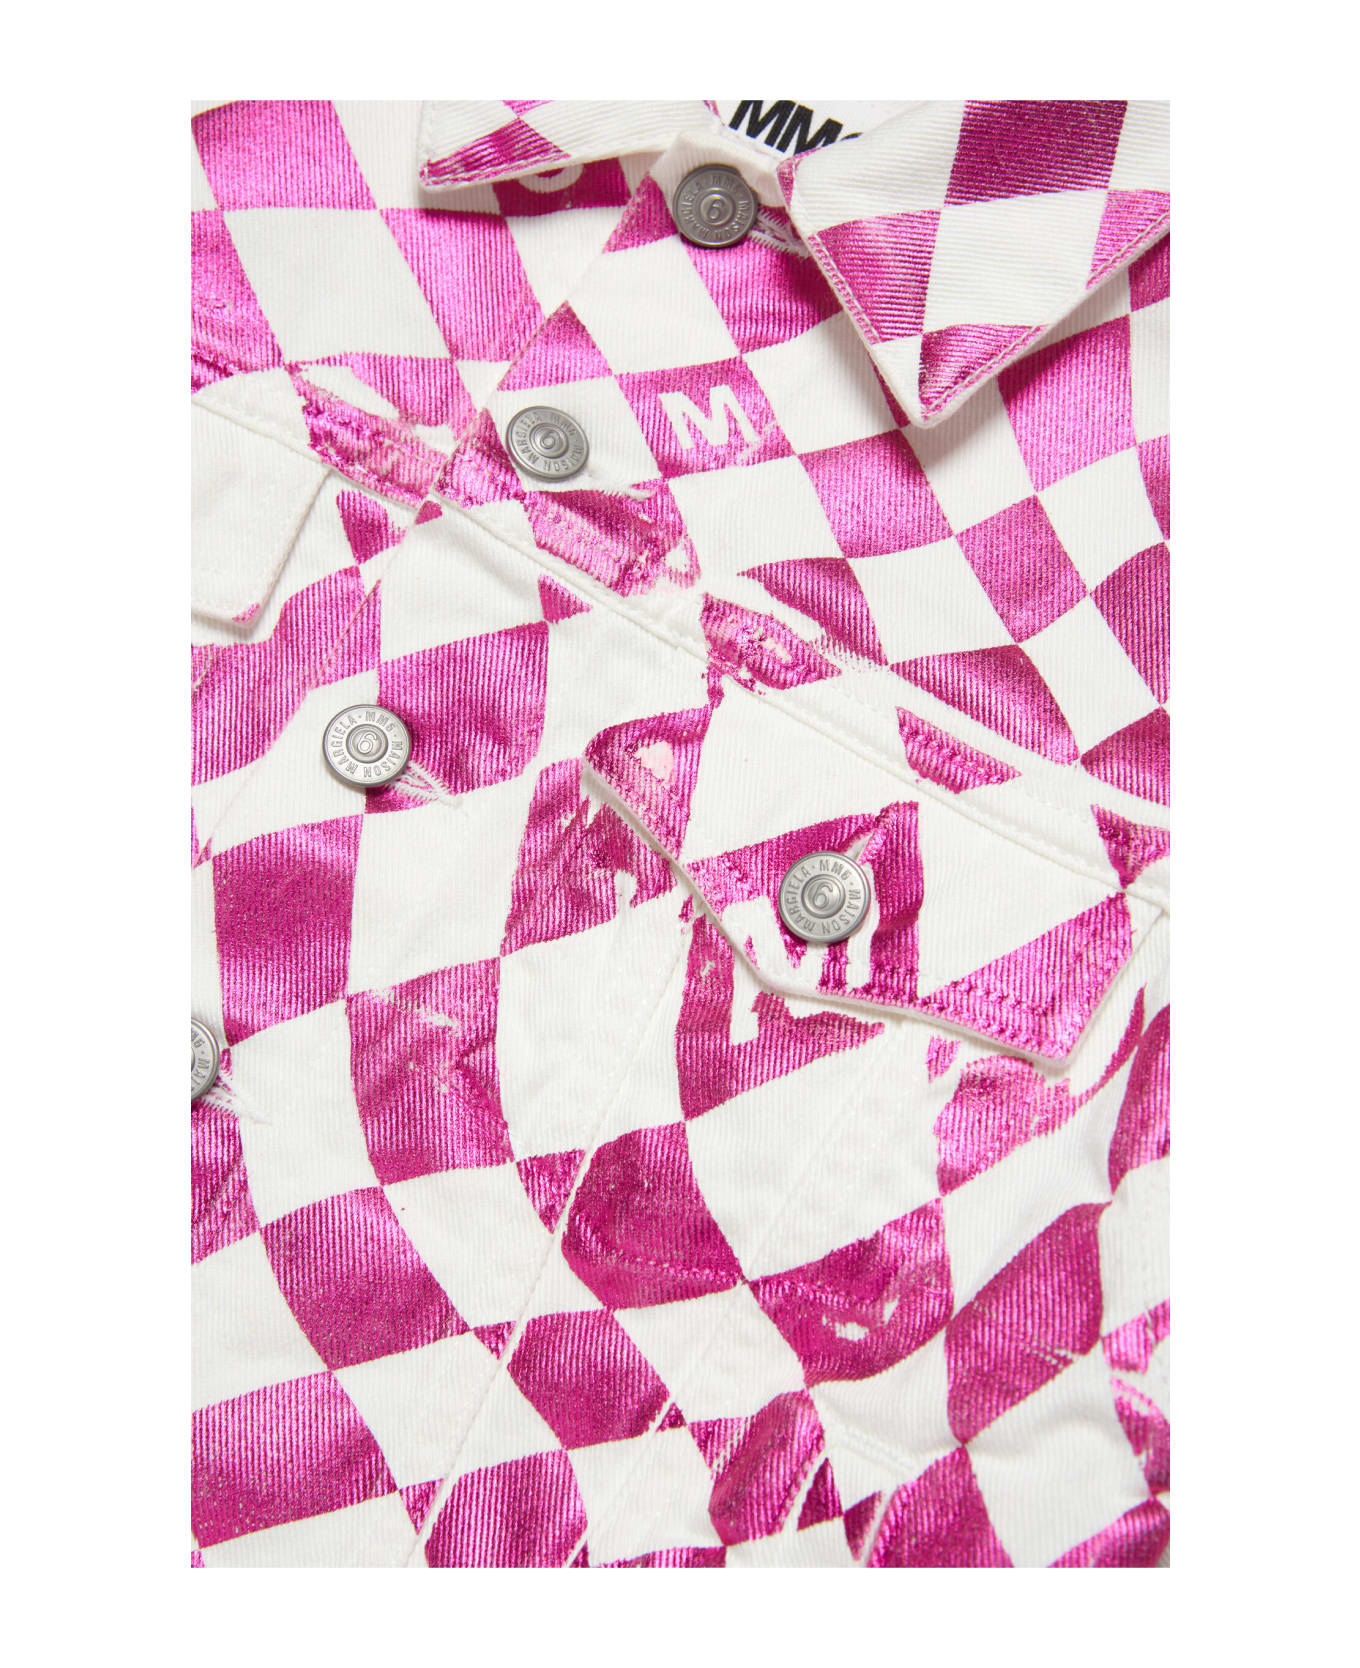 MM6 Maison Margiela Mm6j44u Jacket Maison Margiela White And Pink Denim Jacket With Metallised Chequered Print - White/super pink